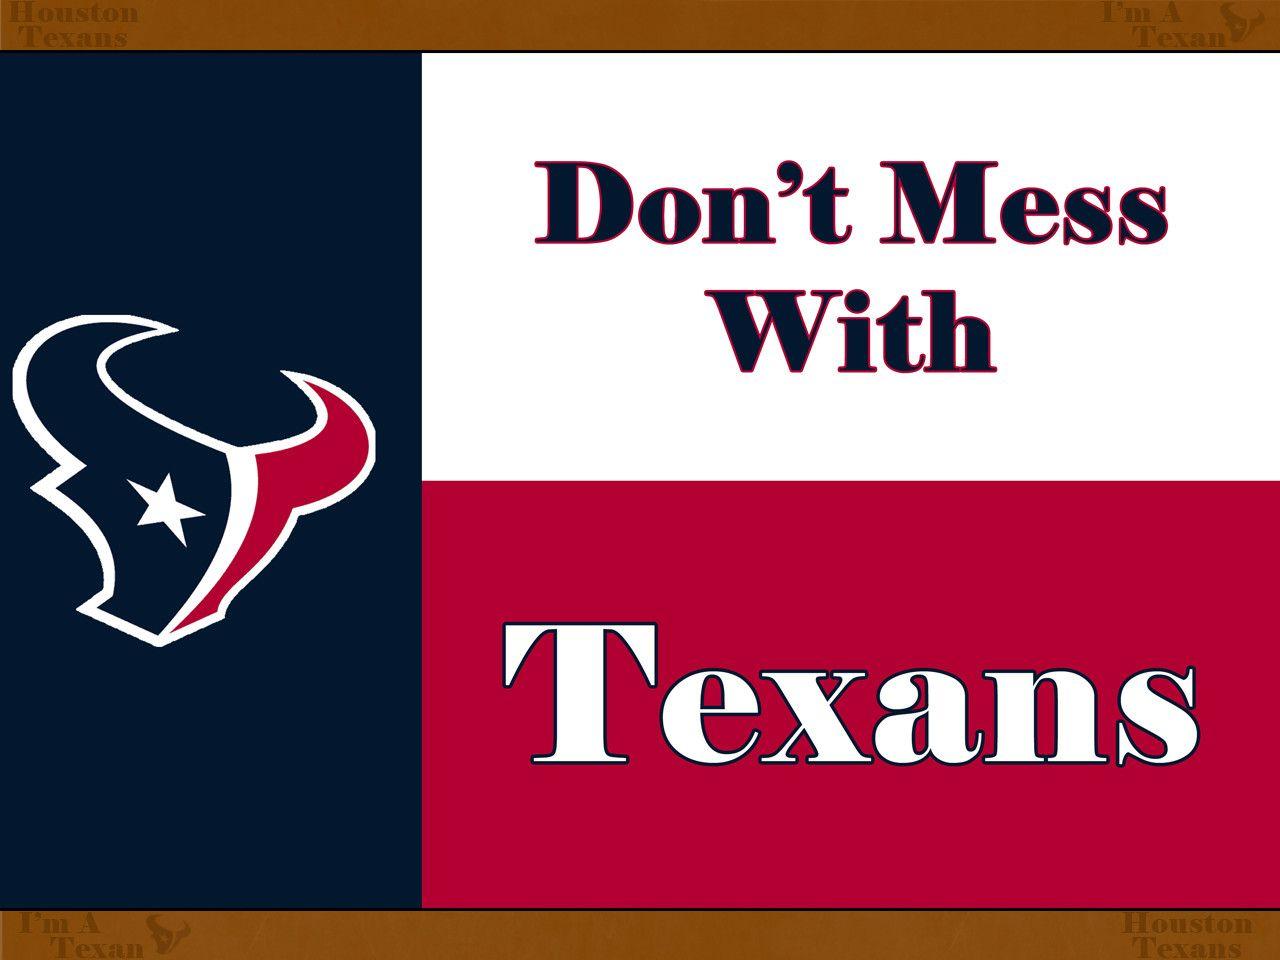 Houston Texans HD wallpaper